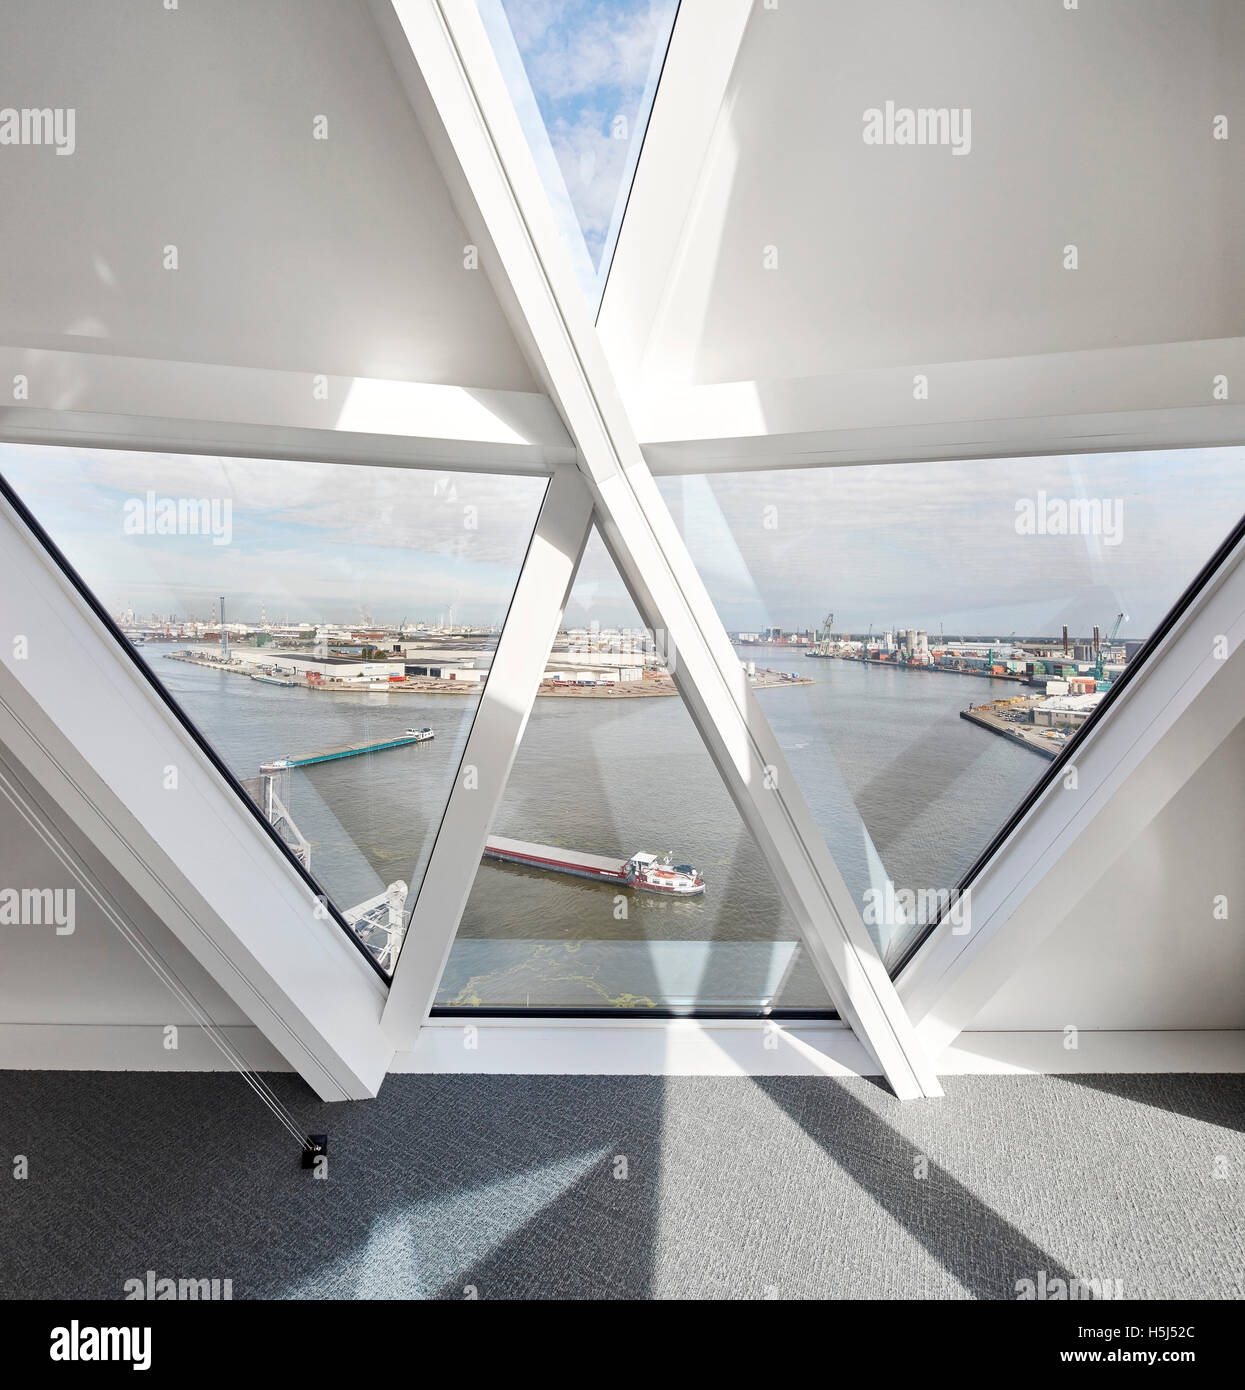 Triangular window panes. Port House, Antwerp, Belgium. Architect: Zaha Hadid Architects, 2016. Stock Photo